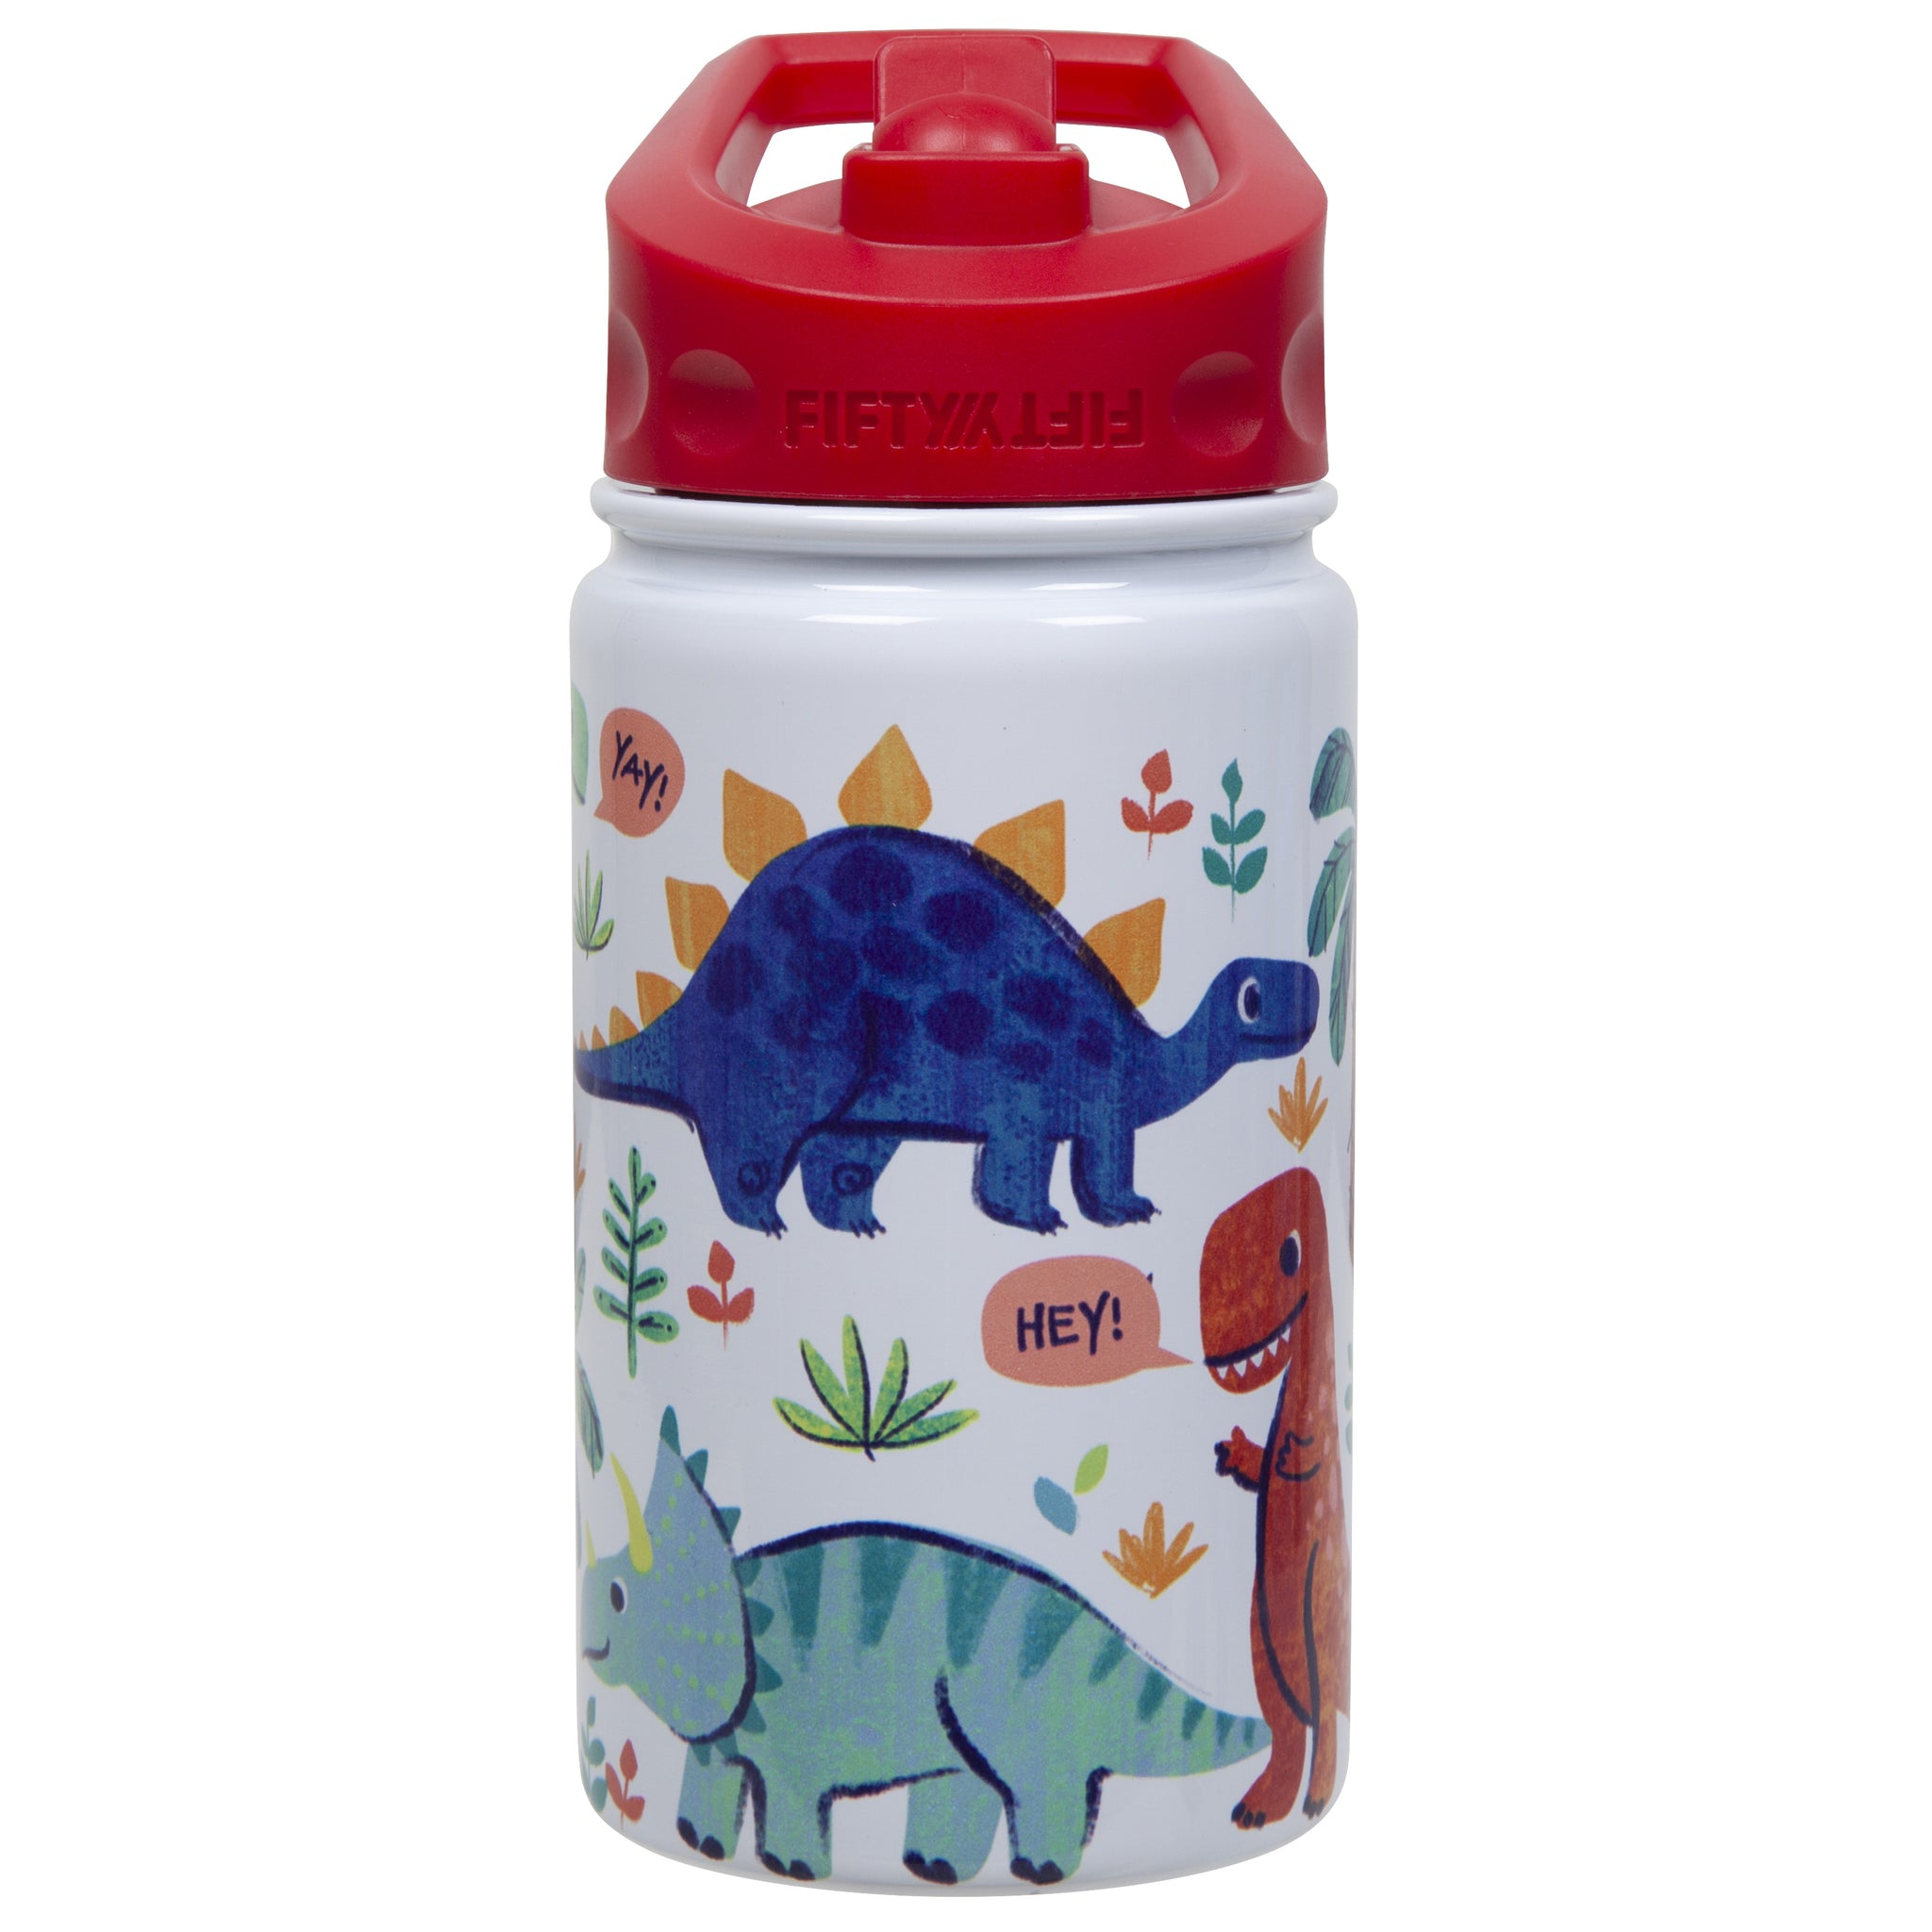 Contig Kids Plastic Water Bottle with Straw Lid Red Little Dino Heard, 14  fl oz. 